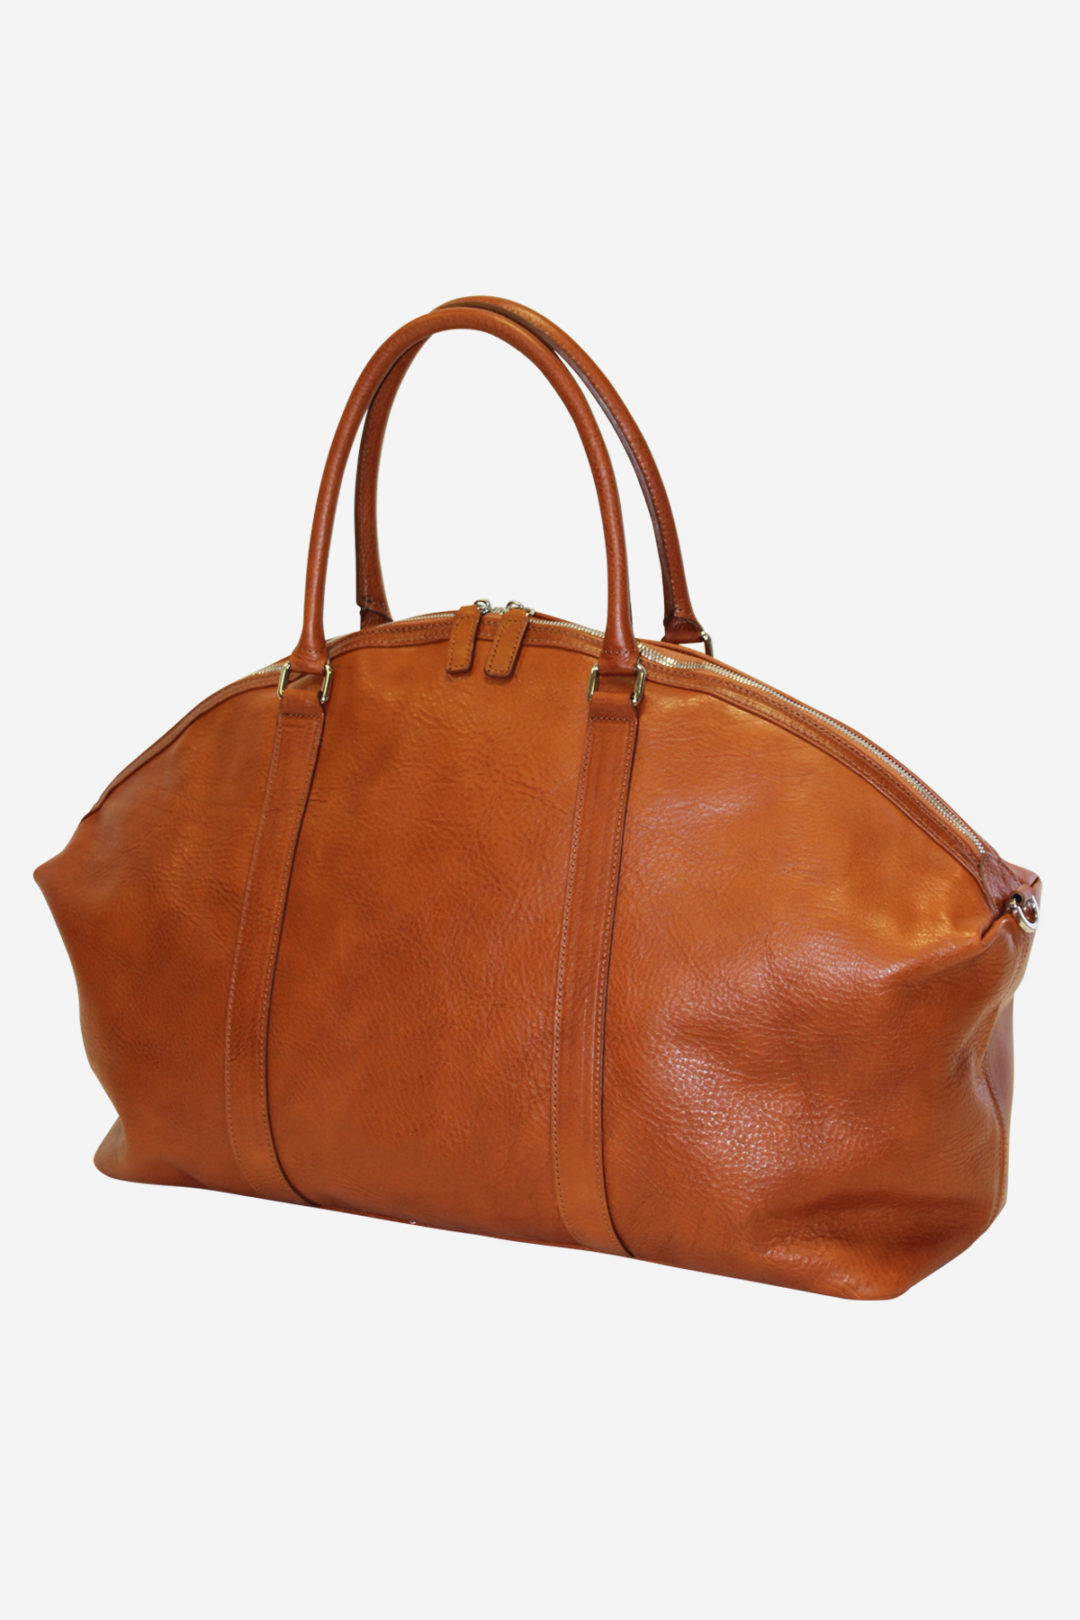 I Medici Firenze Leather Italian Briefcase/Messenger Bag 16